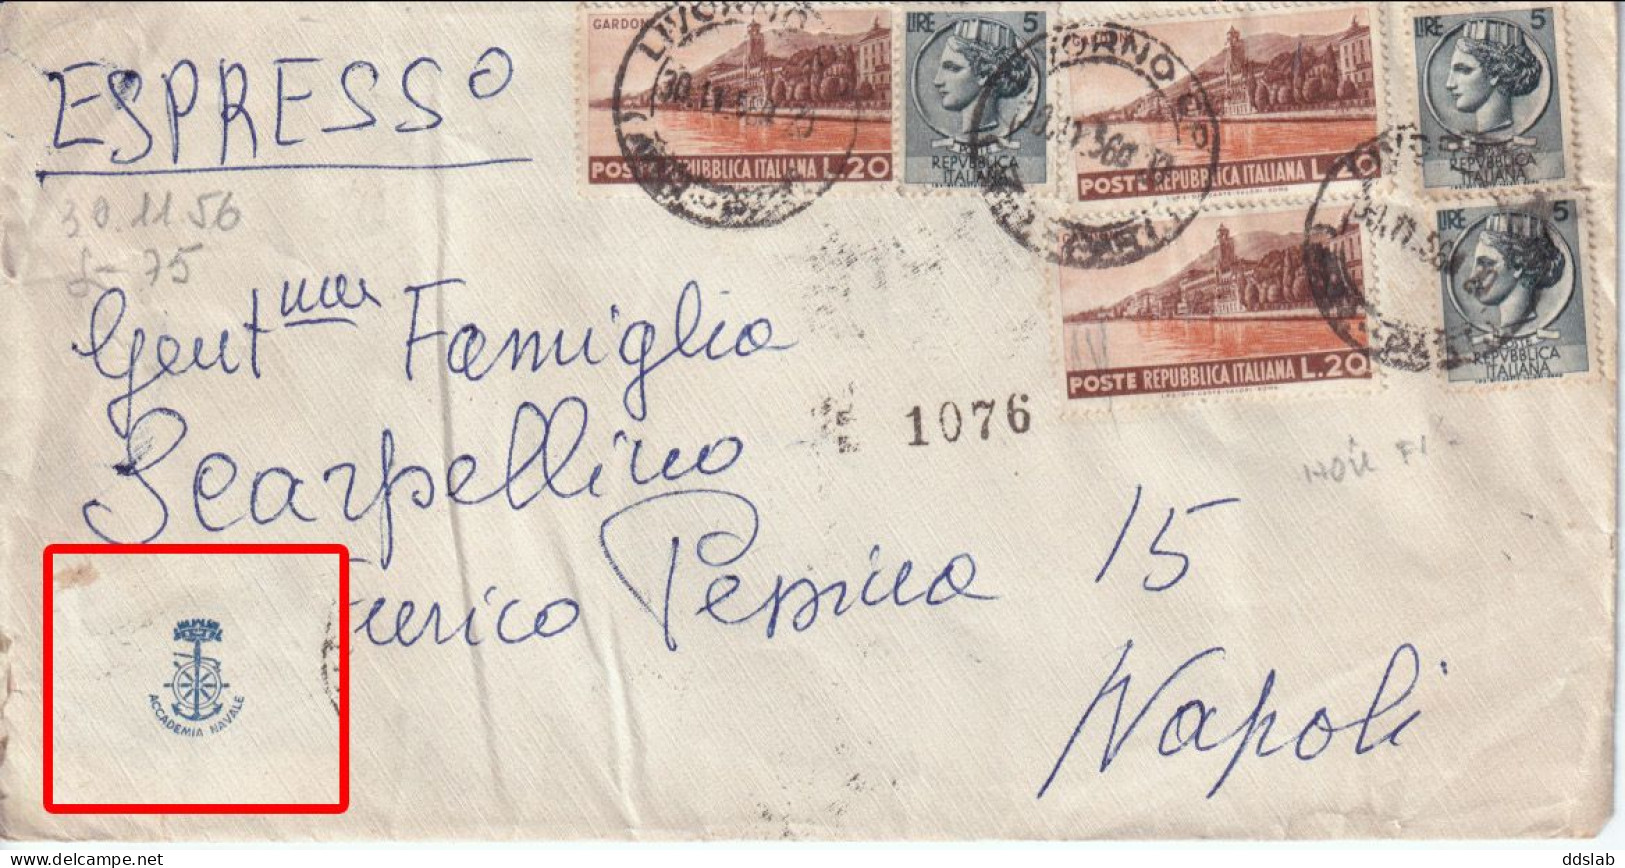 30/11/1956 - Espresso Da Accademia Navale Livorno A Napoli - Affrancata 3 X 20L Propaganda Turistica + 3 X 5L Siracusana - Express-post/pneumatisch